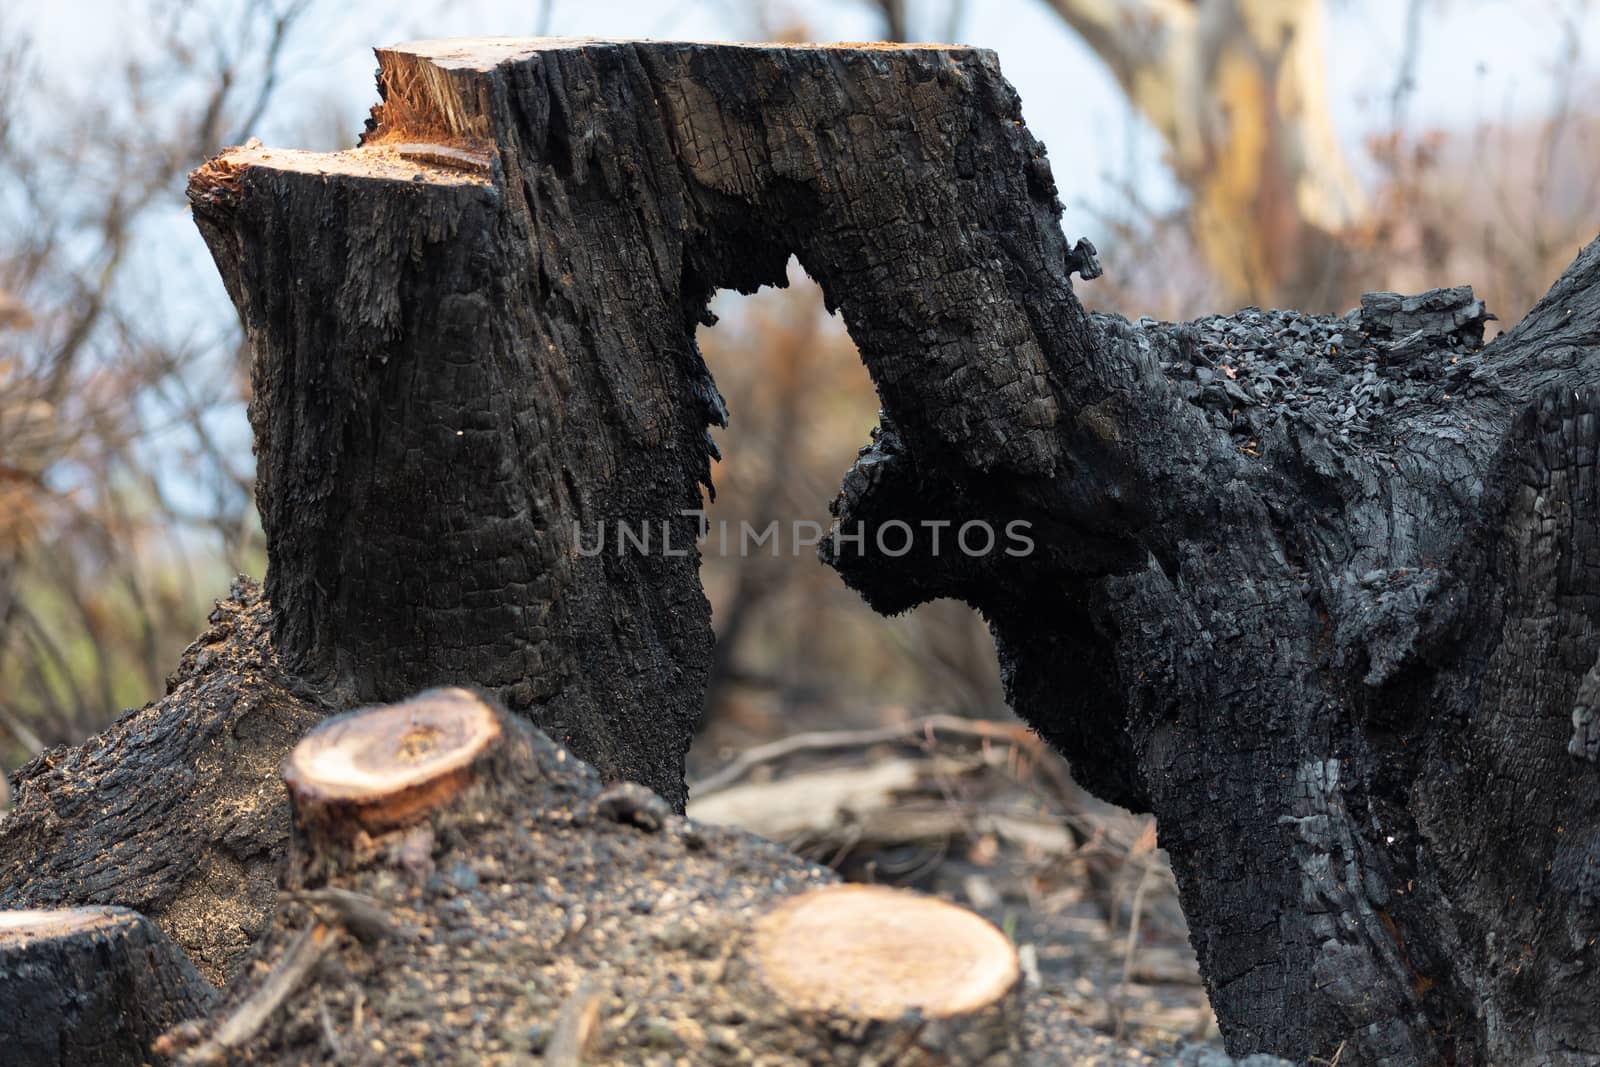 Burnt hollow tree felled after bushfires in Australia  Shallow depth of field